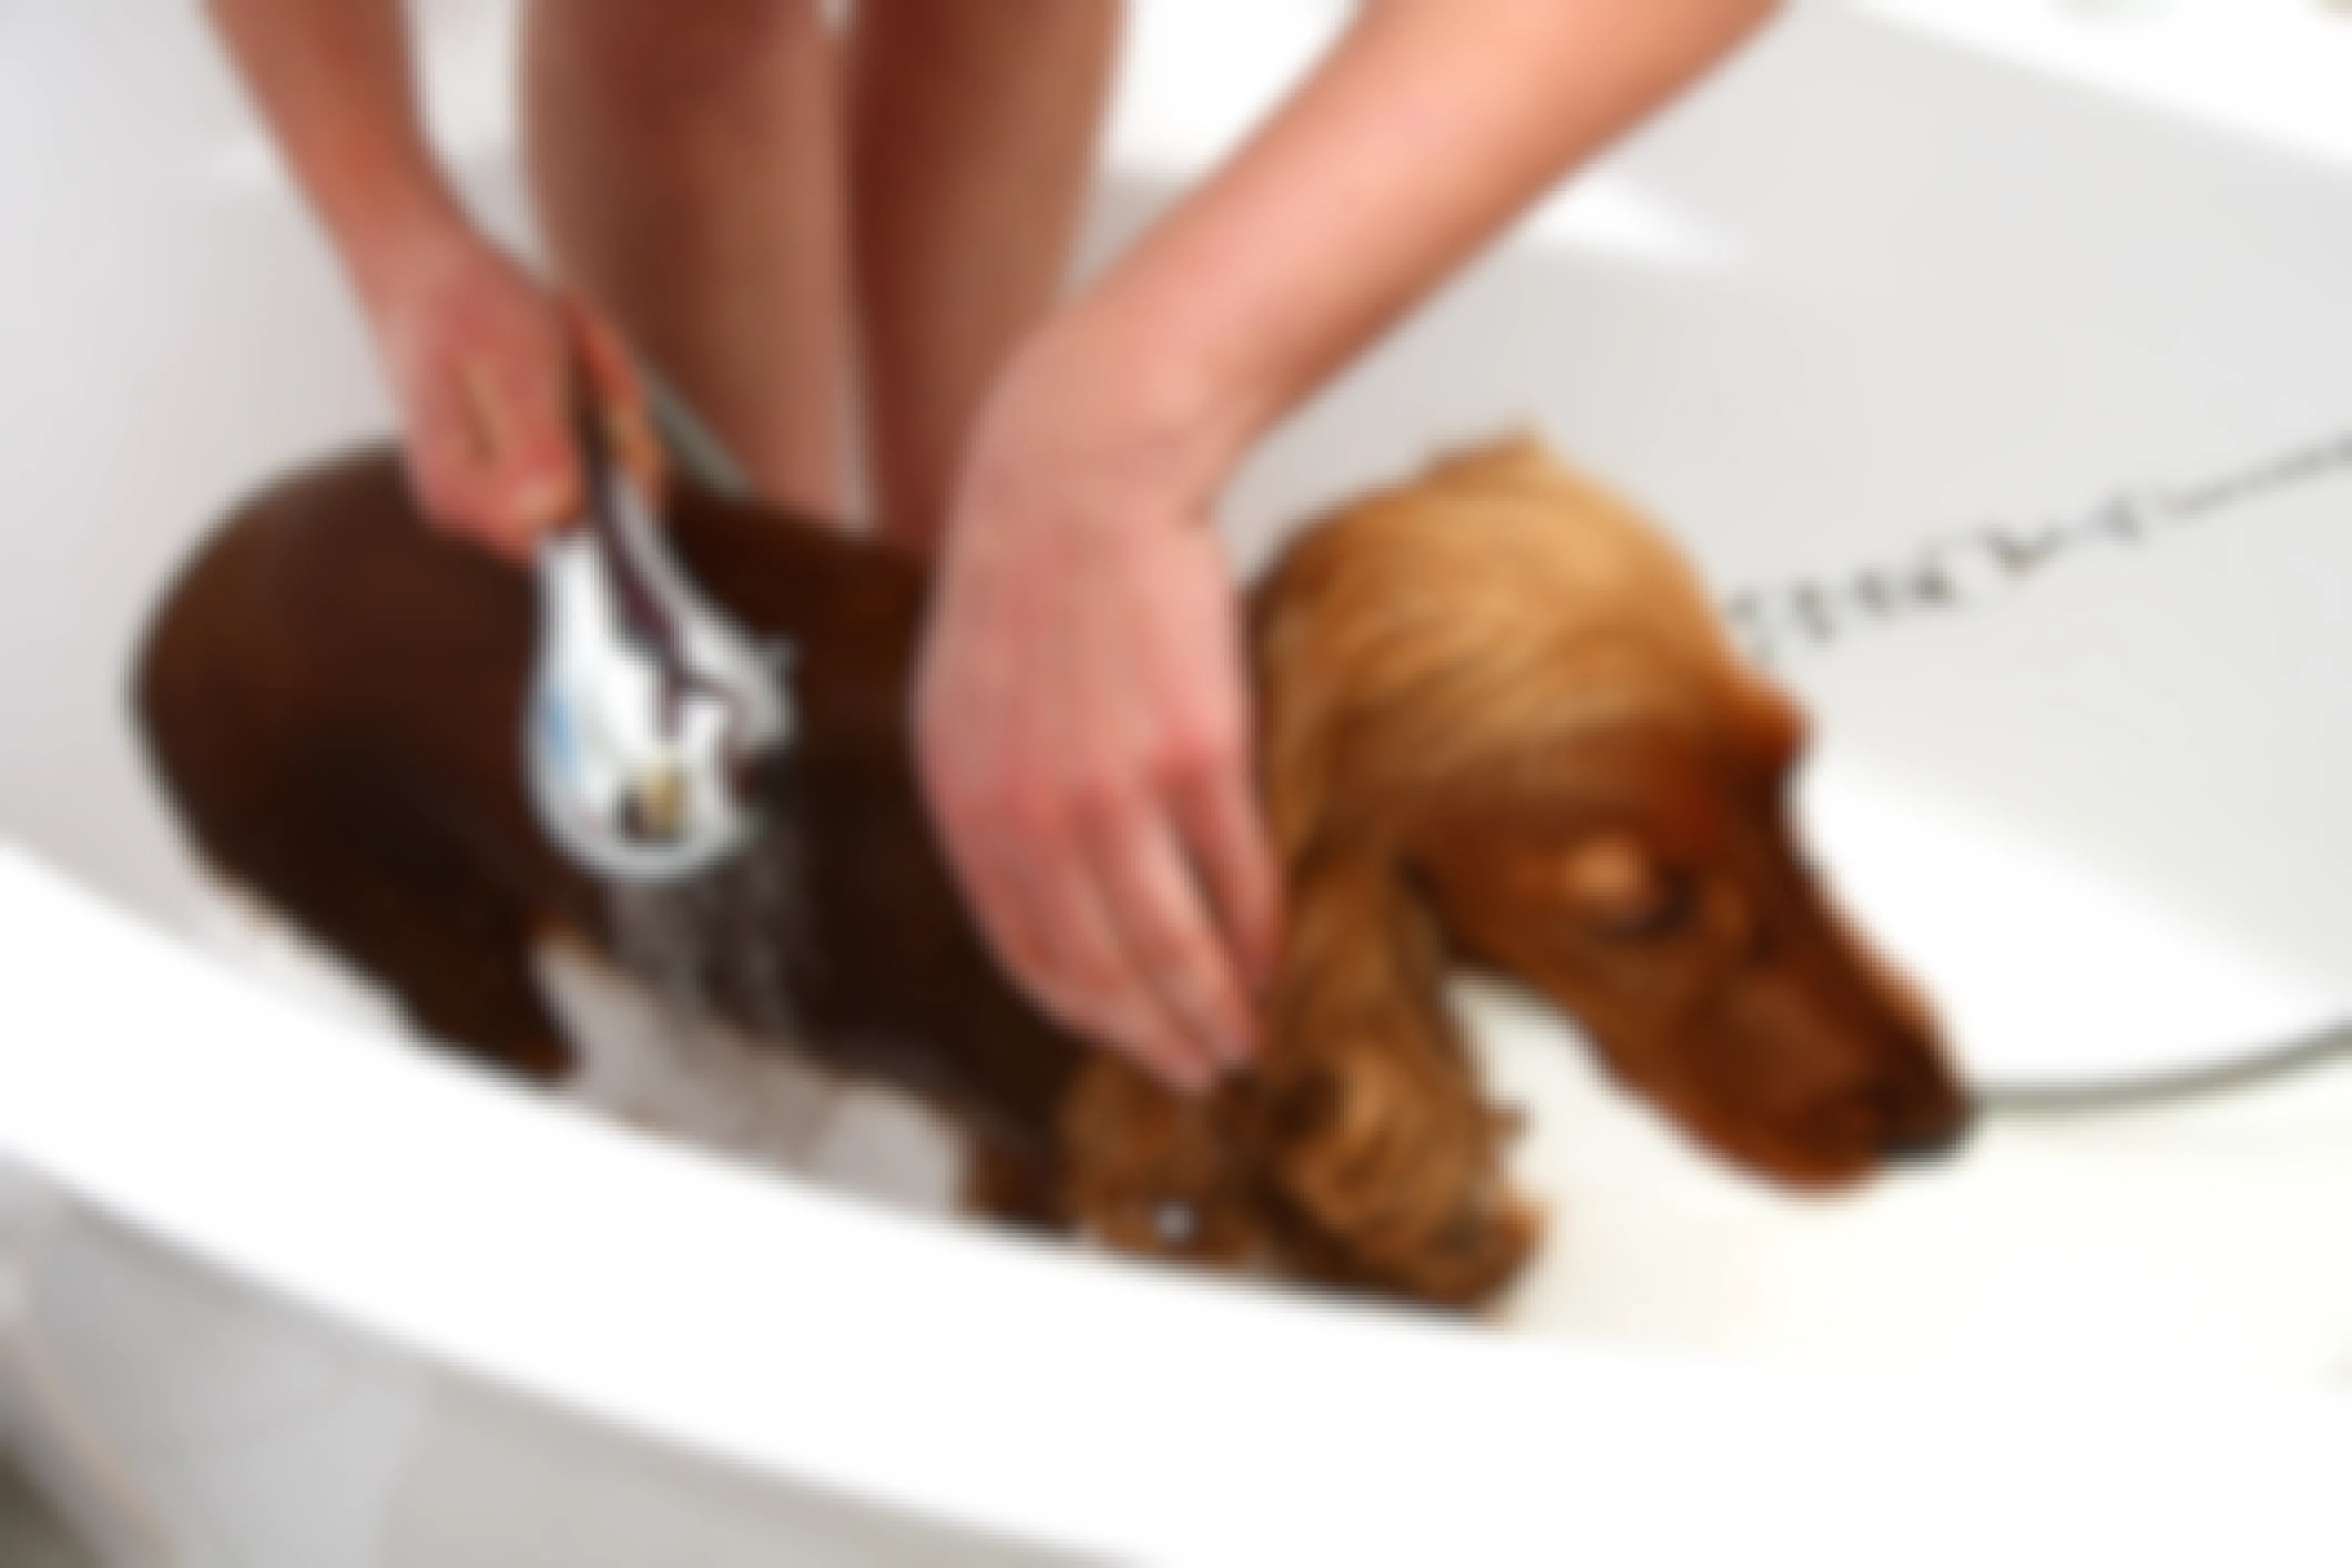 Dog being washed with a spray shower head in a bathtub